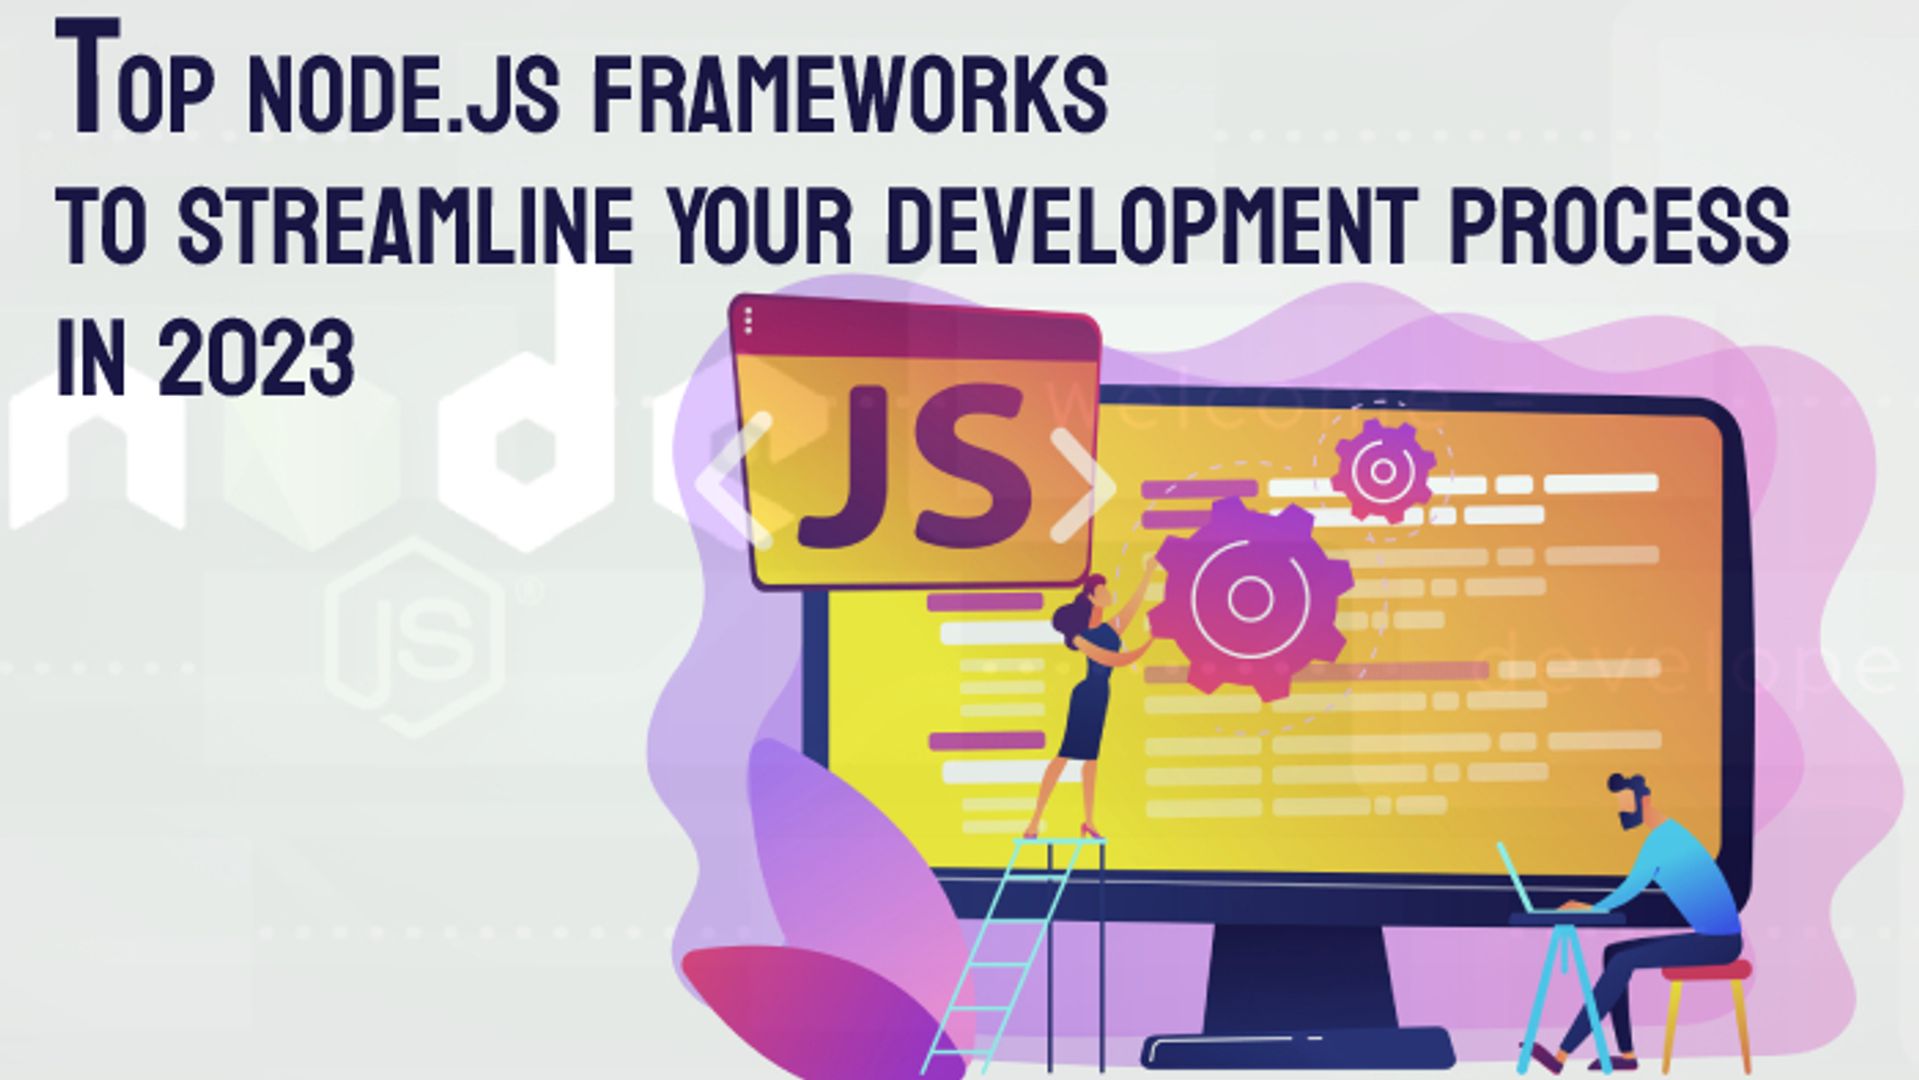 Top 10 Node.js Frameworks to Streamline Your Development Process in 2023